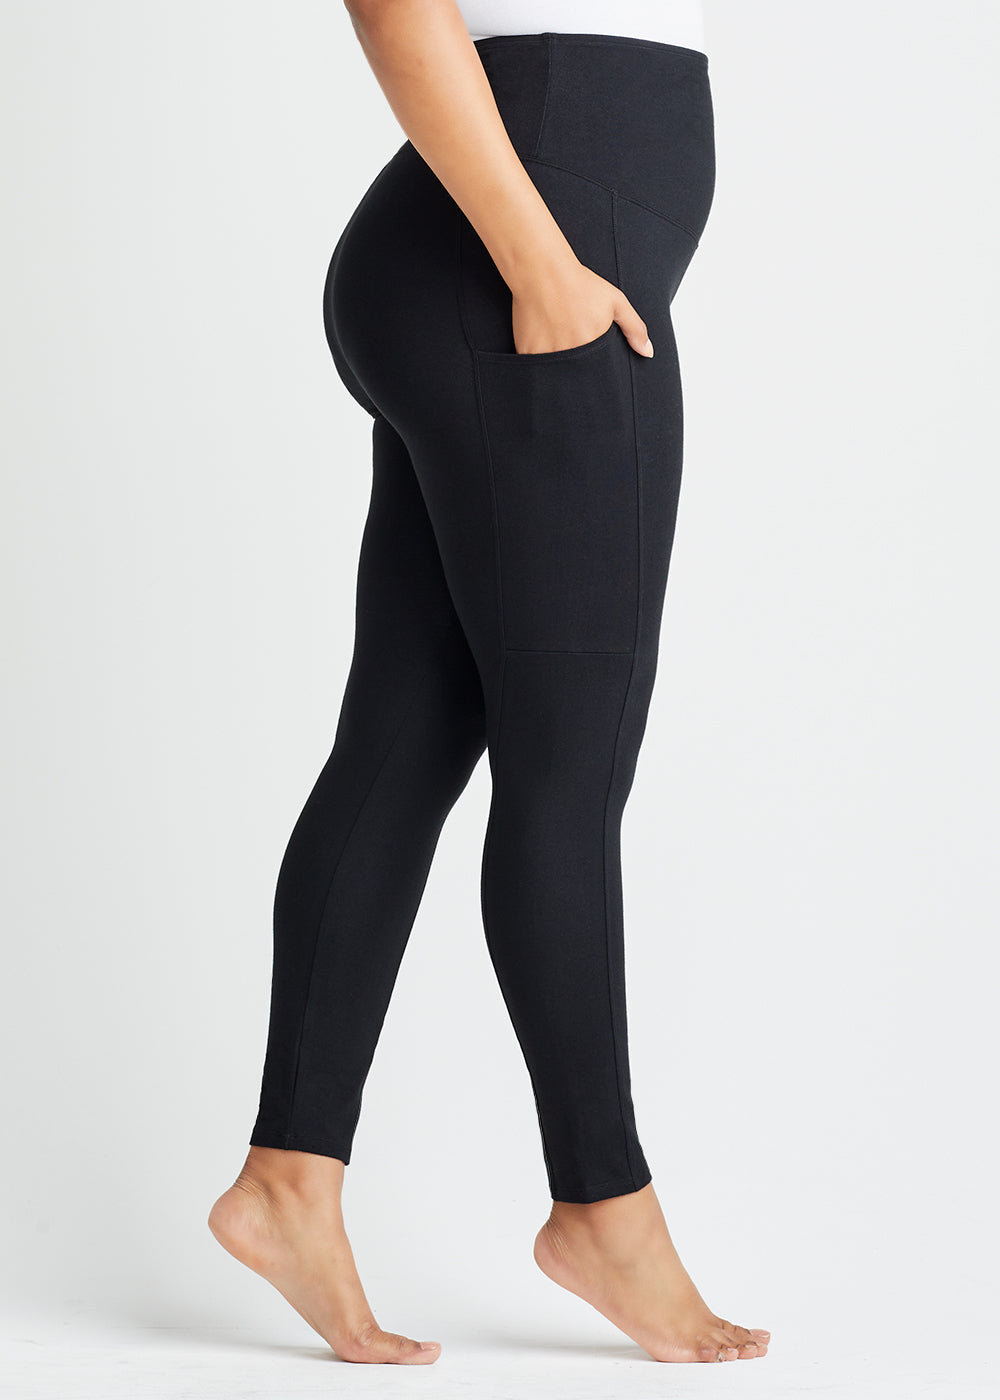 TARSE Womens capri Yoga Pants Loose Soft Drawstring Workout Sweatpants  causal Lounge Pants with Pockets (Wine Red, S)